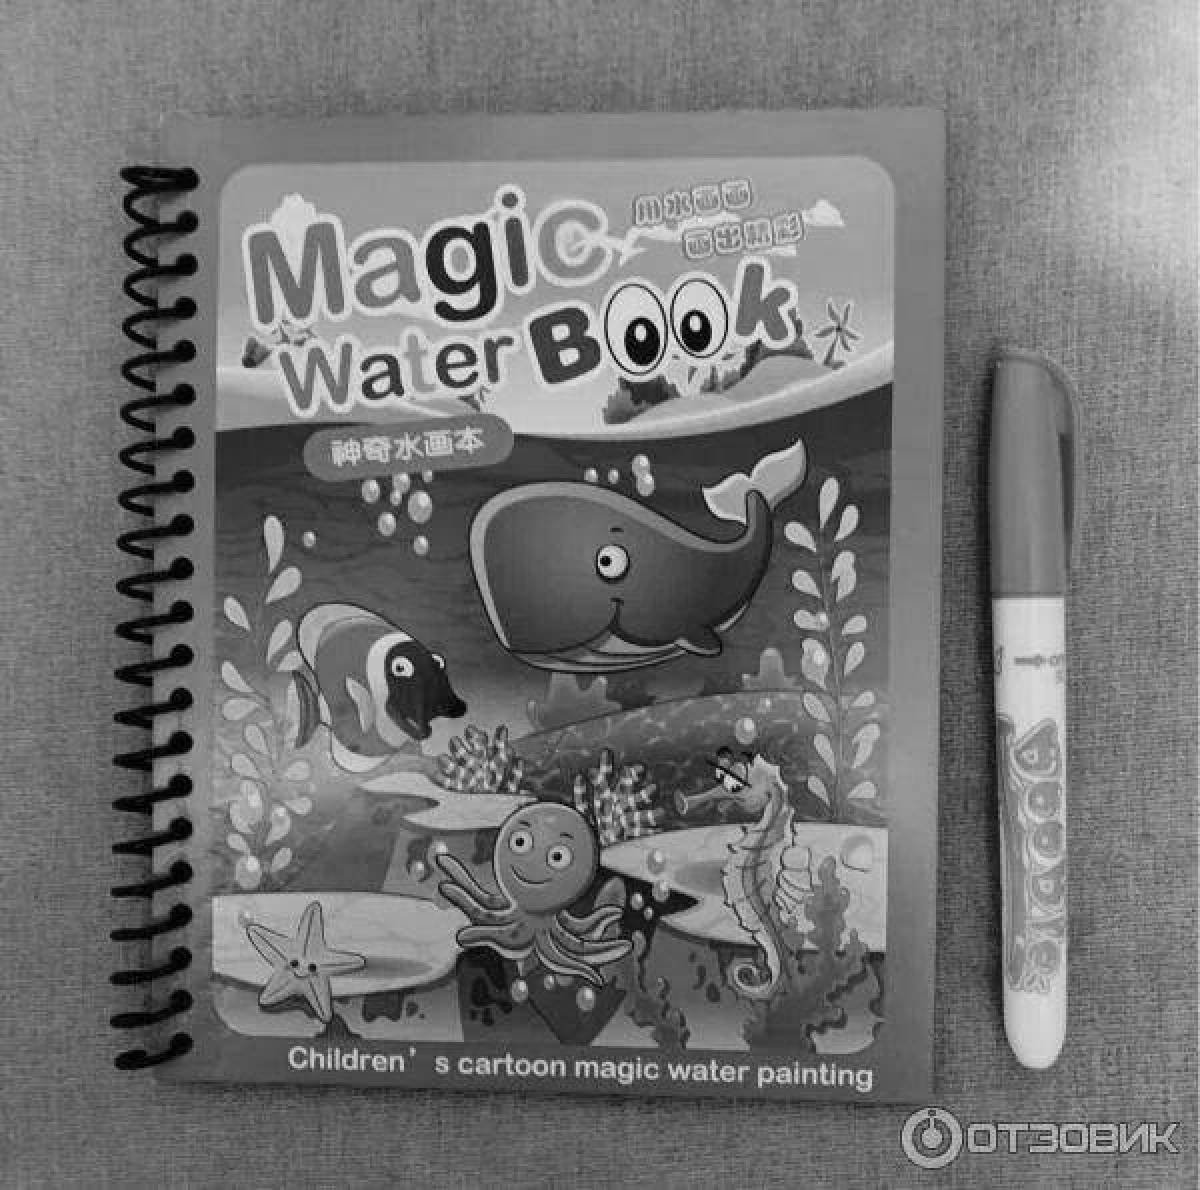 Enchanting coloring magic water book